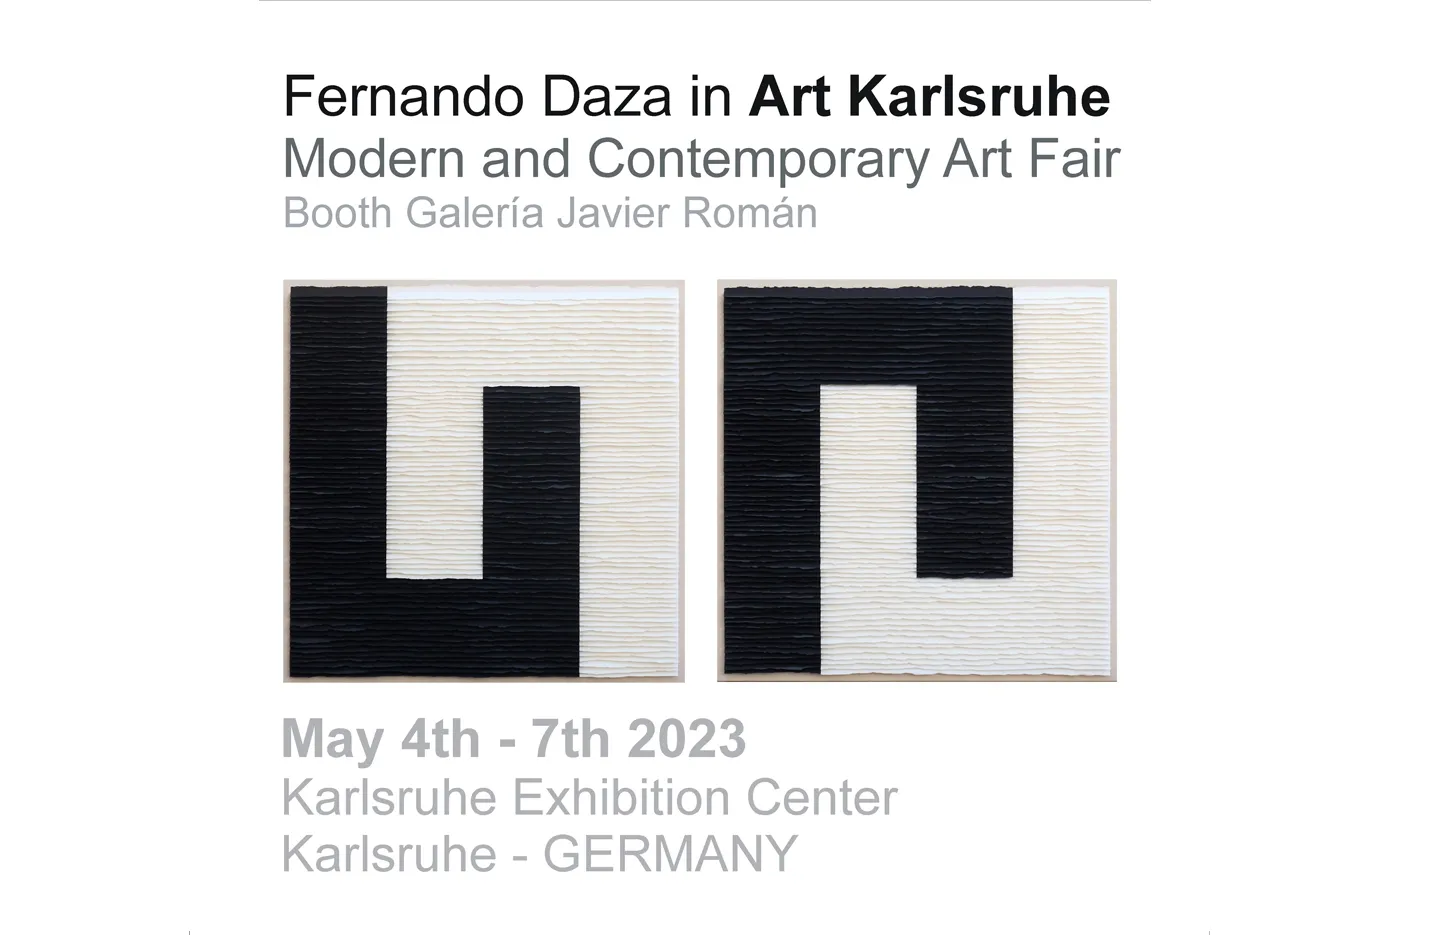 Fernando Daza Visual Artist - evento 2022 art karlsruhe